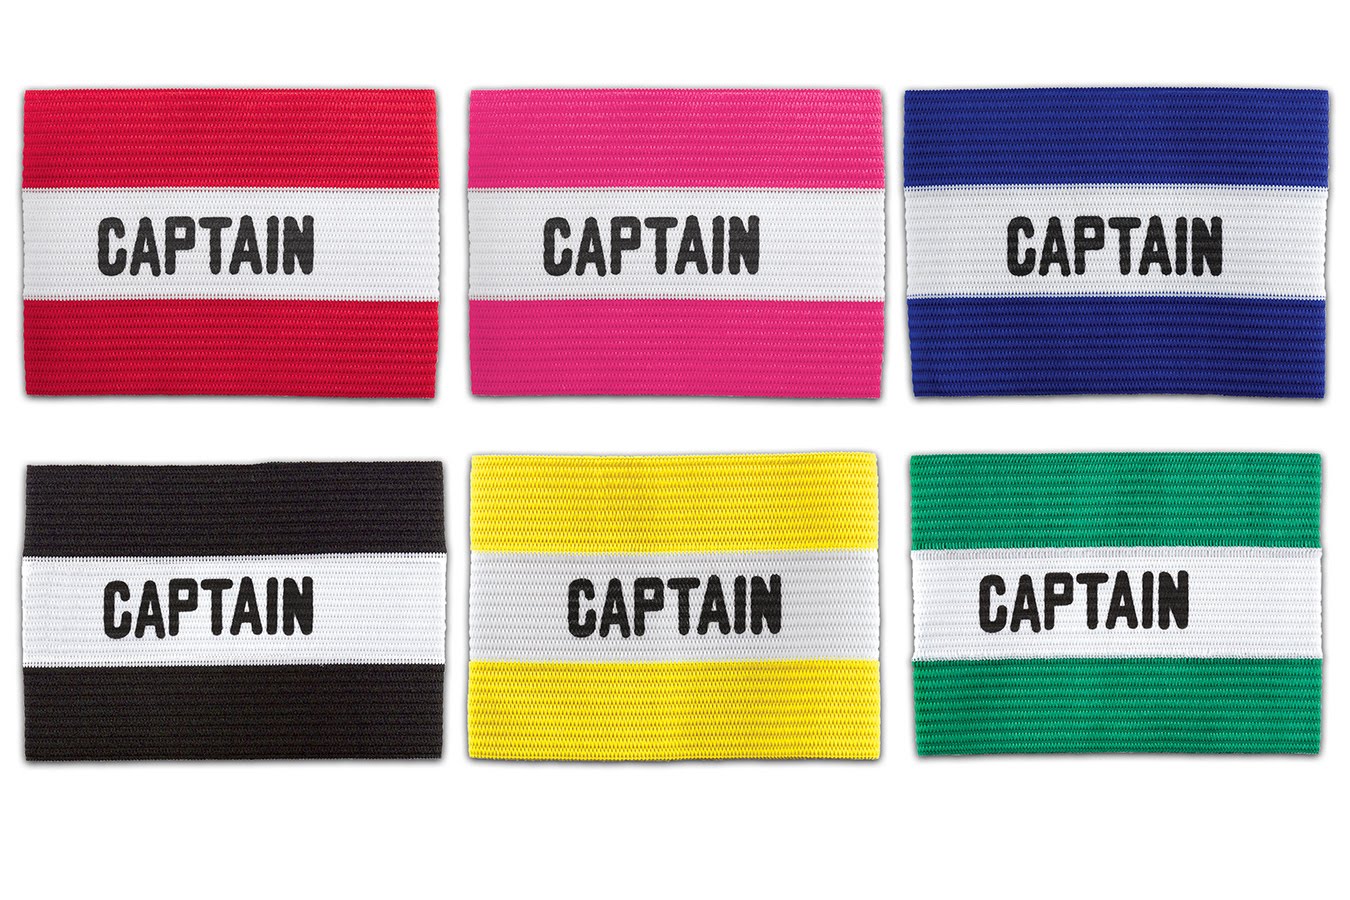 Captain Arm Band, Specify Color - Each